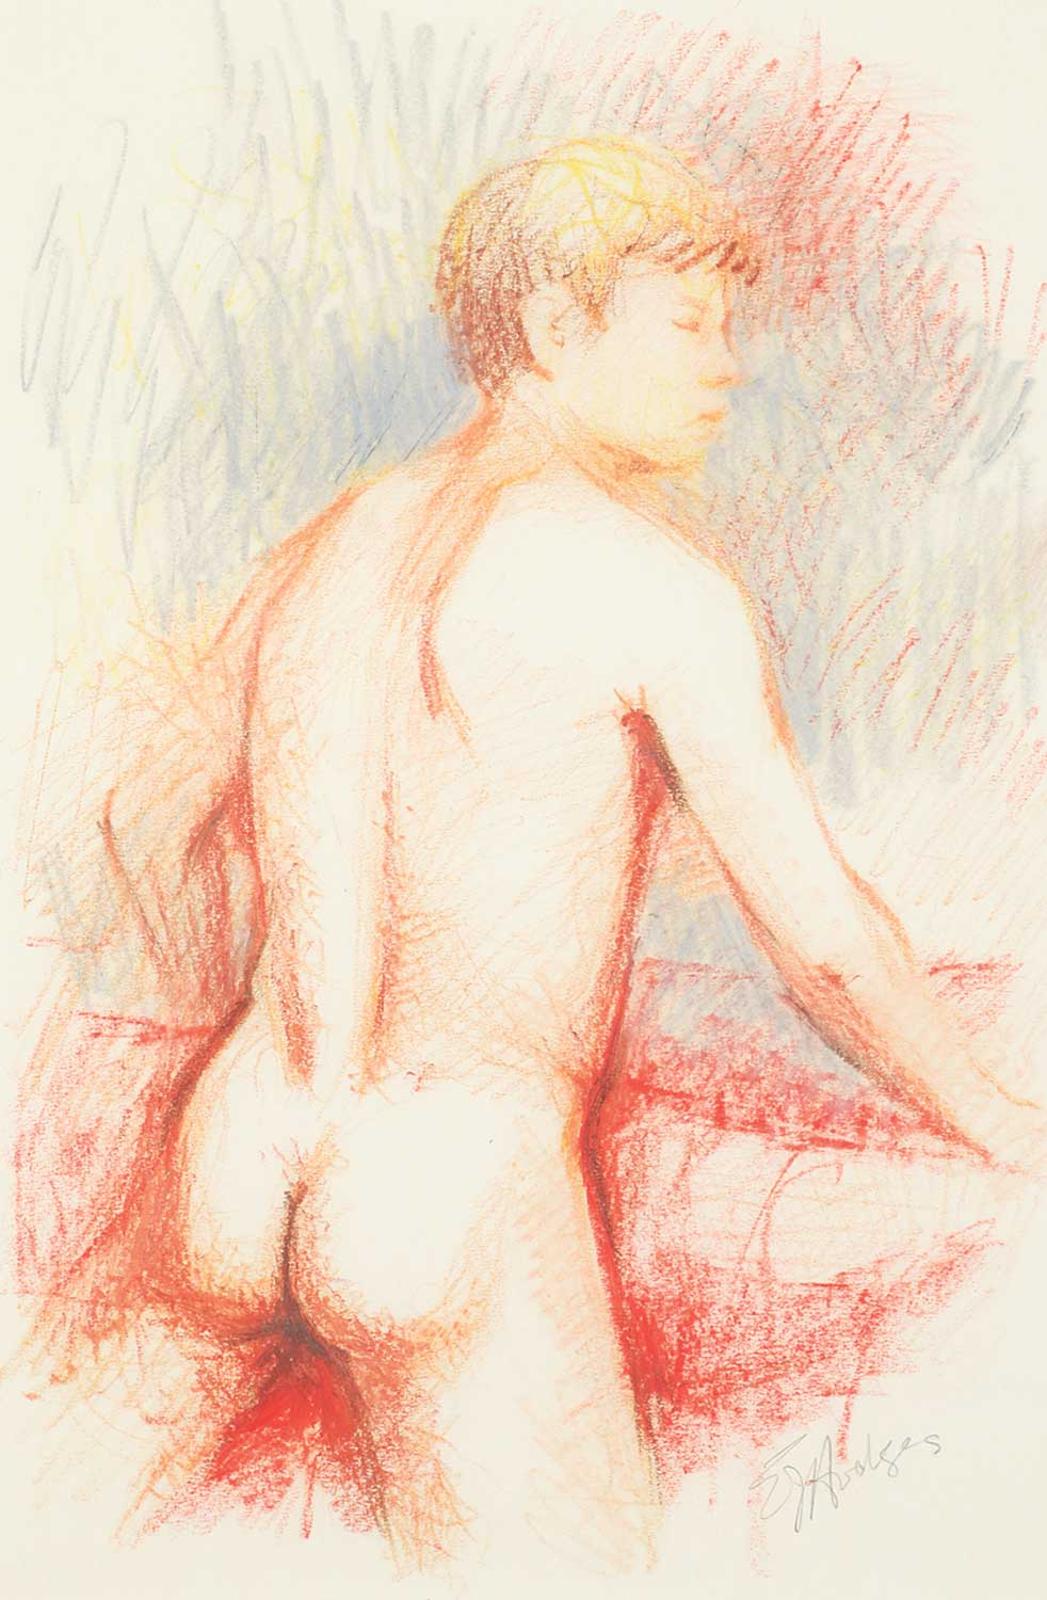 R. Hodges - Untitled - Male Figure Study